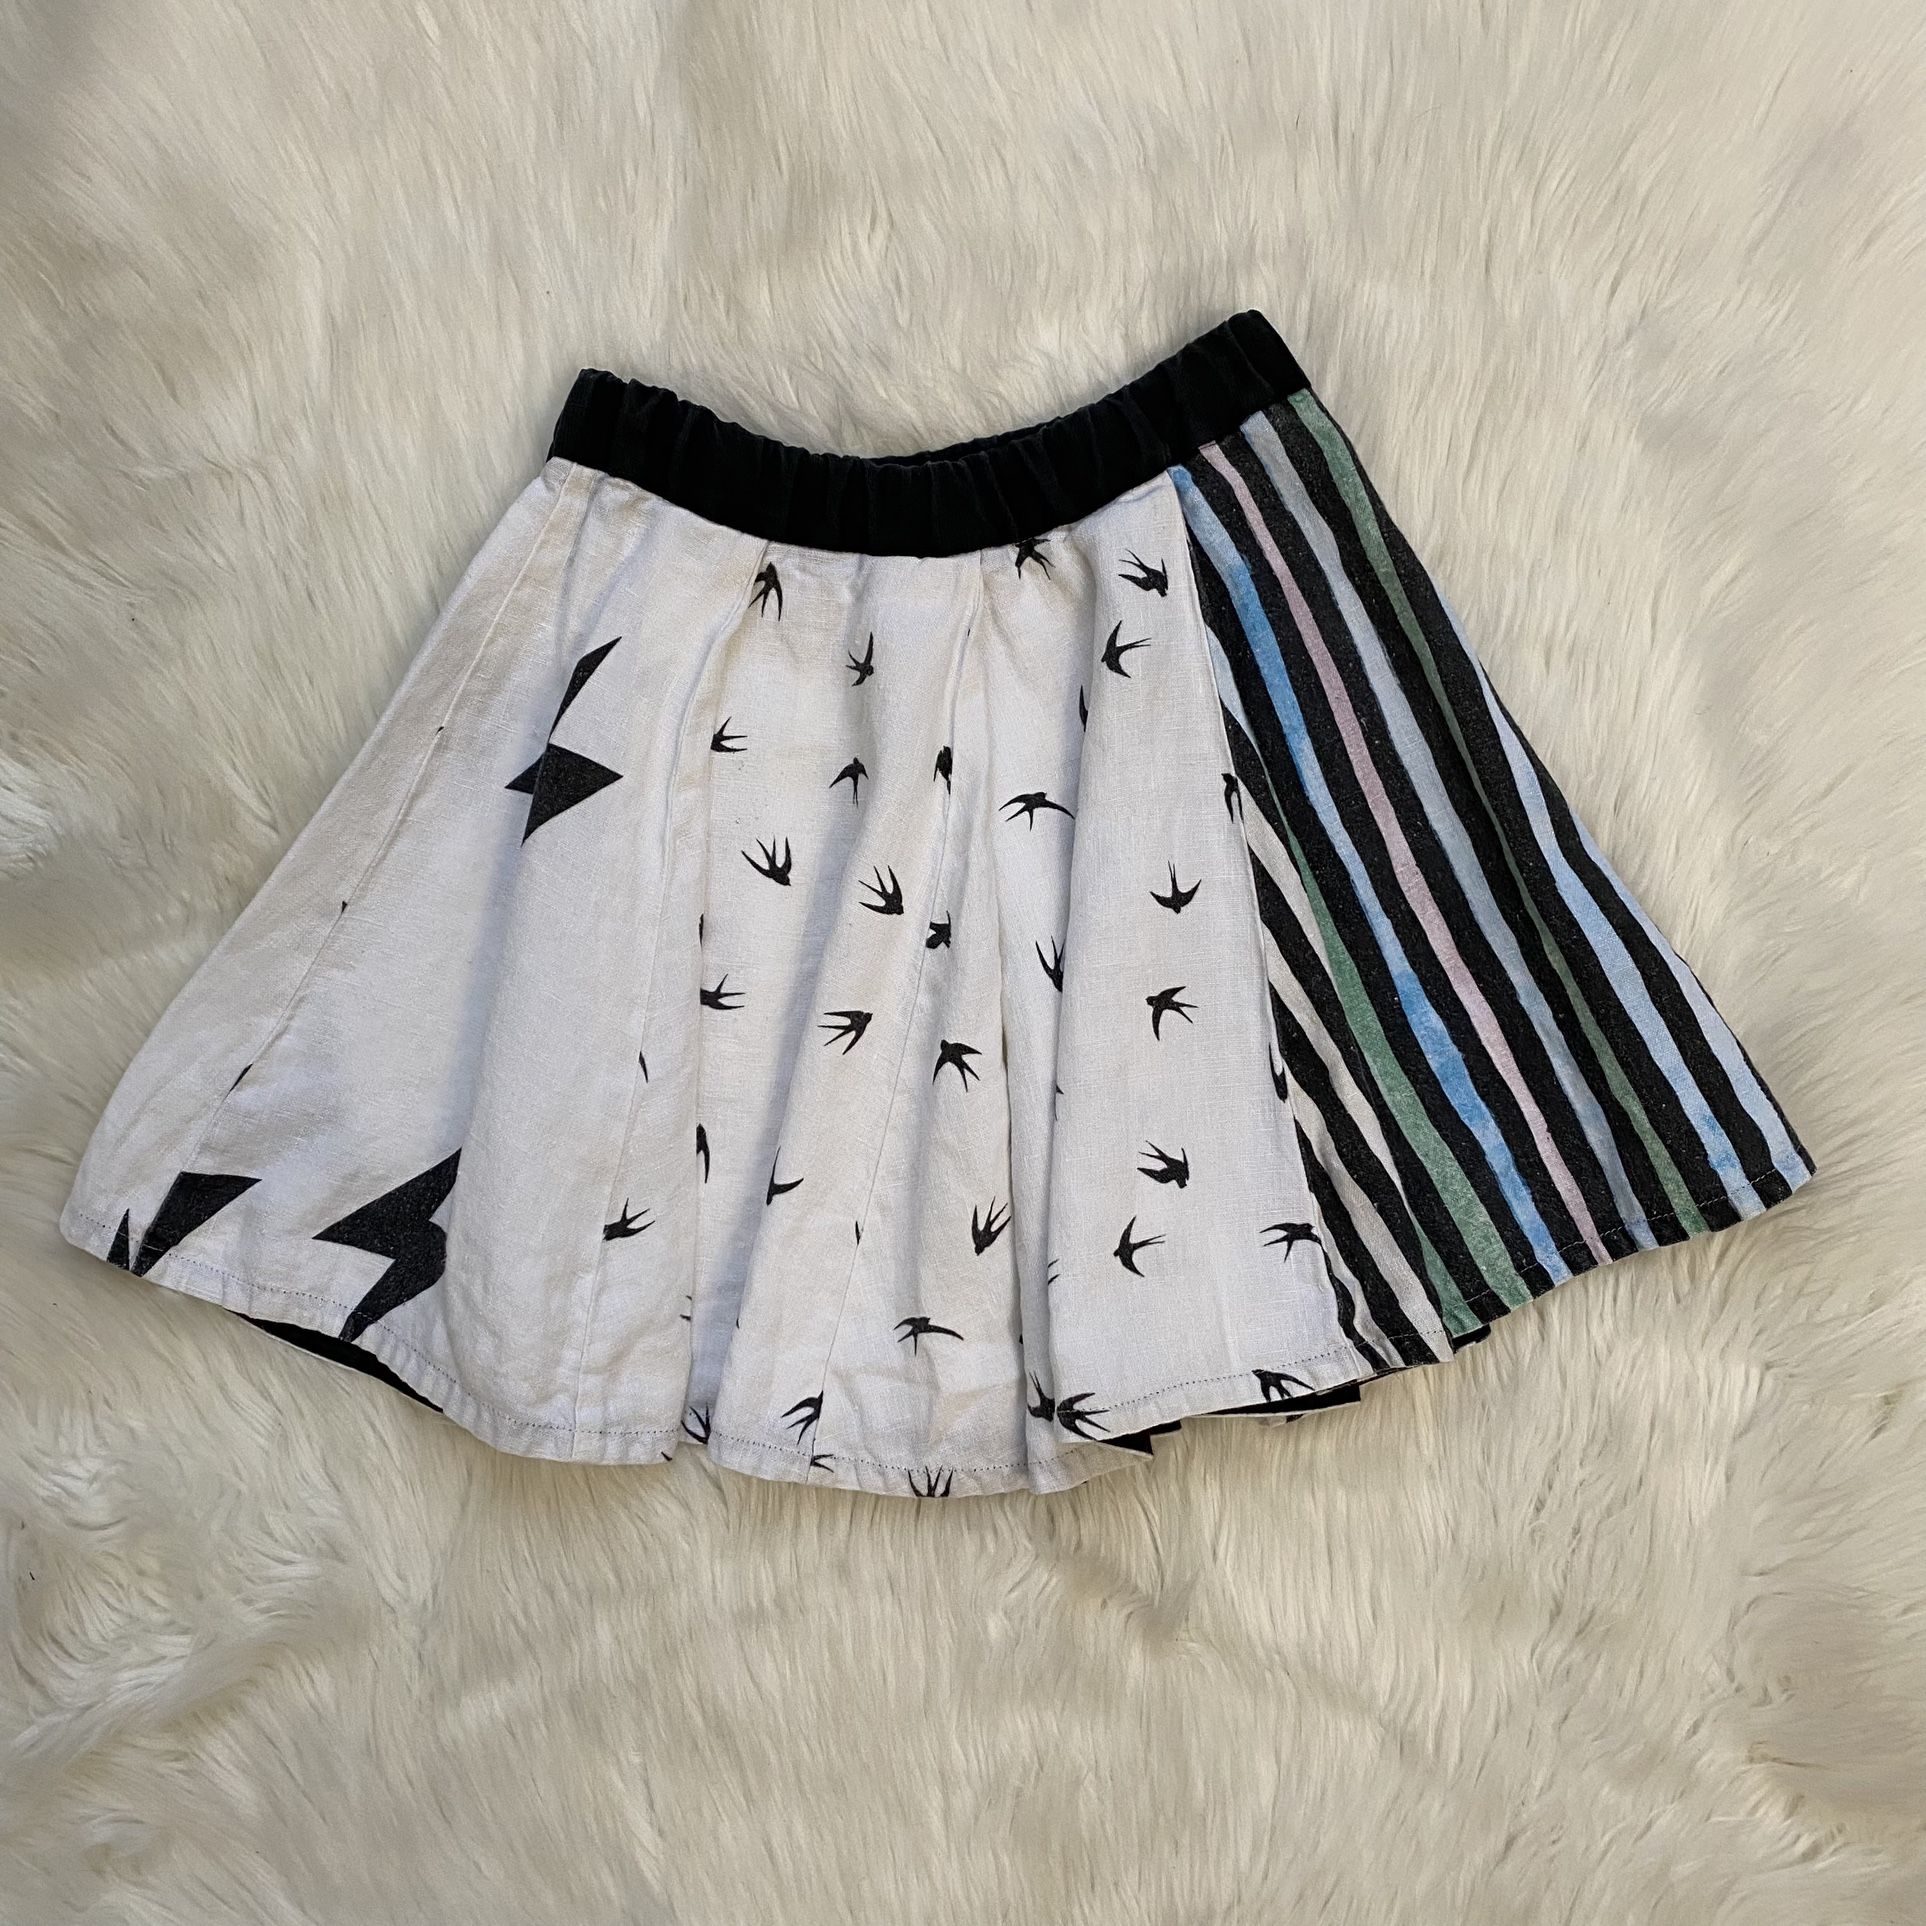 Hilda Henri Girls Skirt Size 8